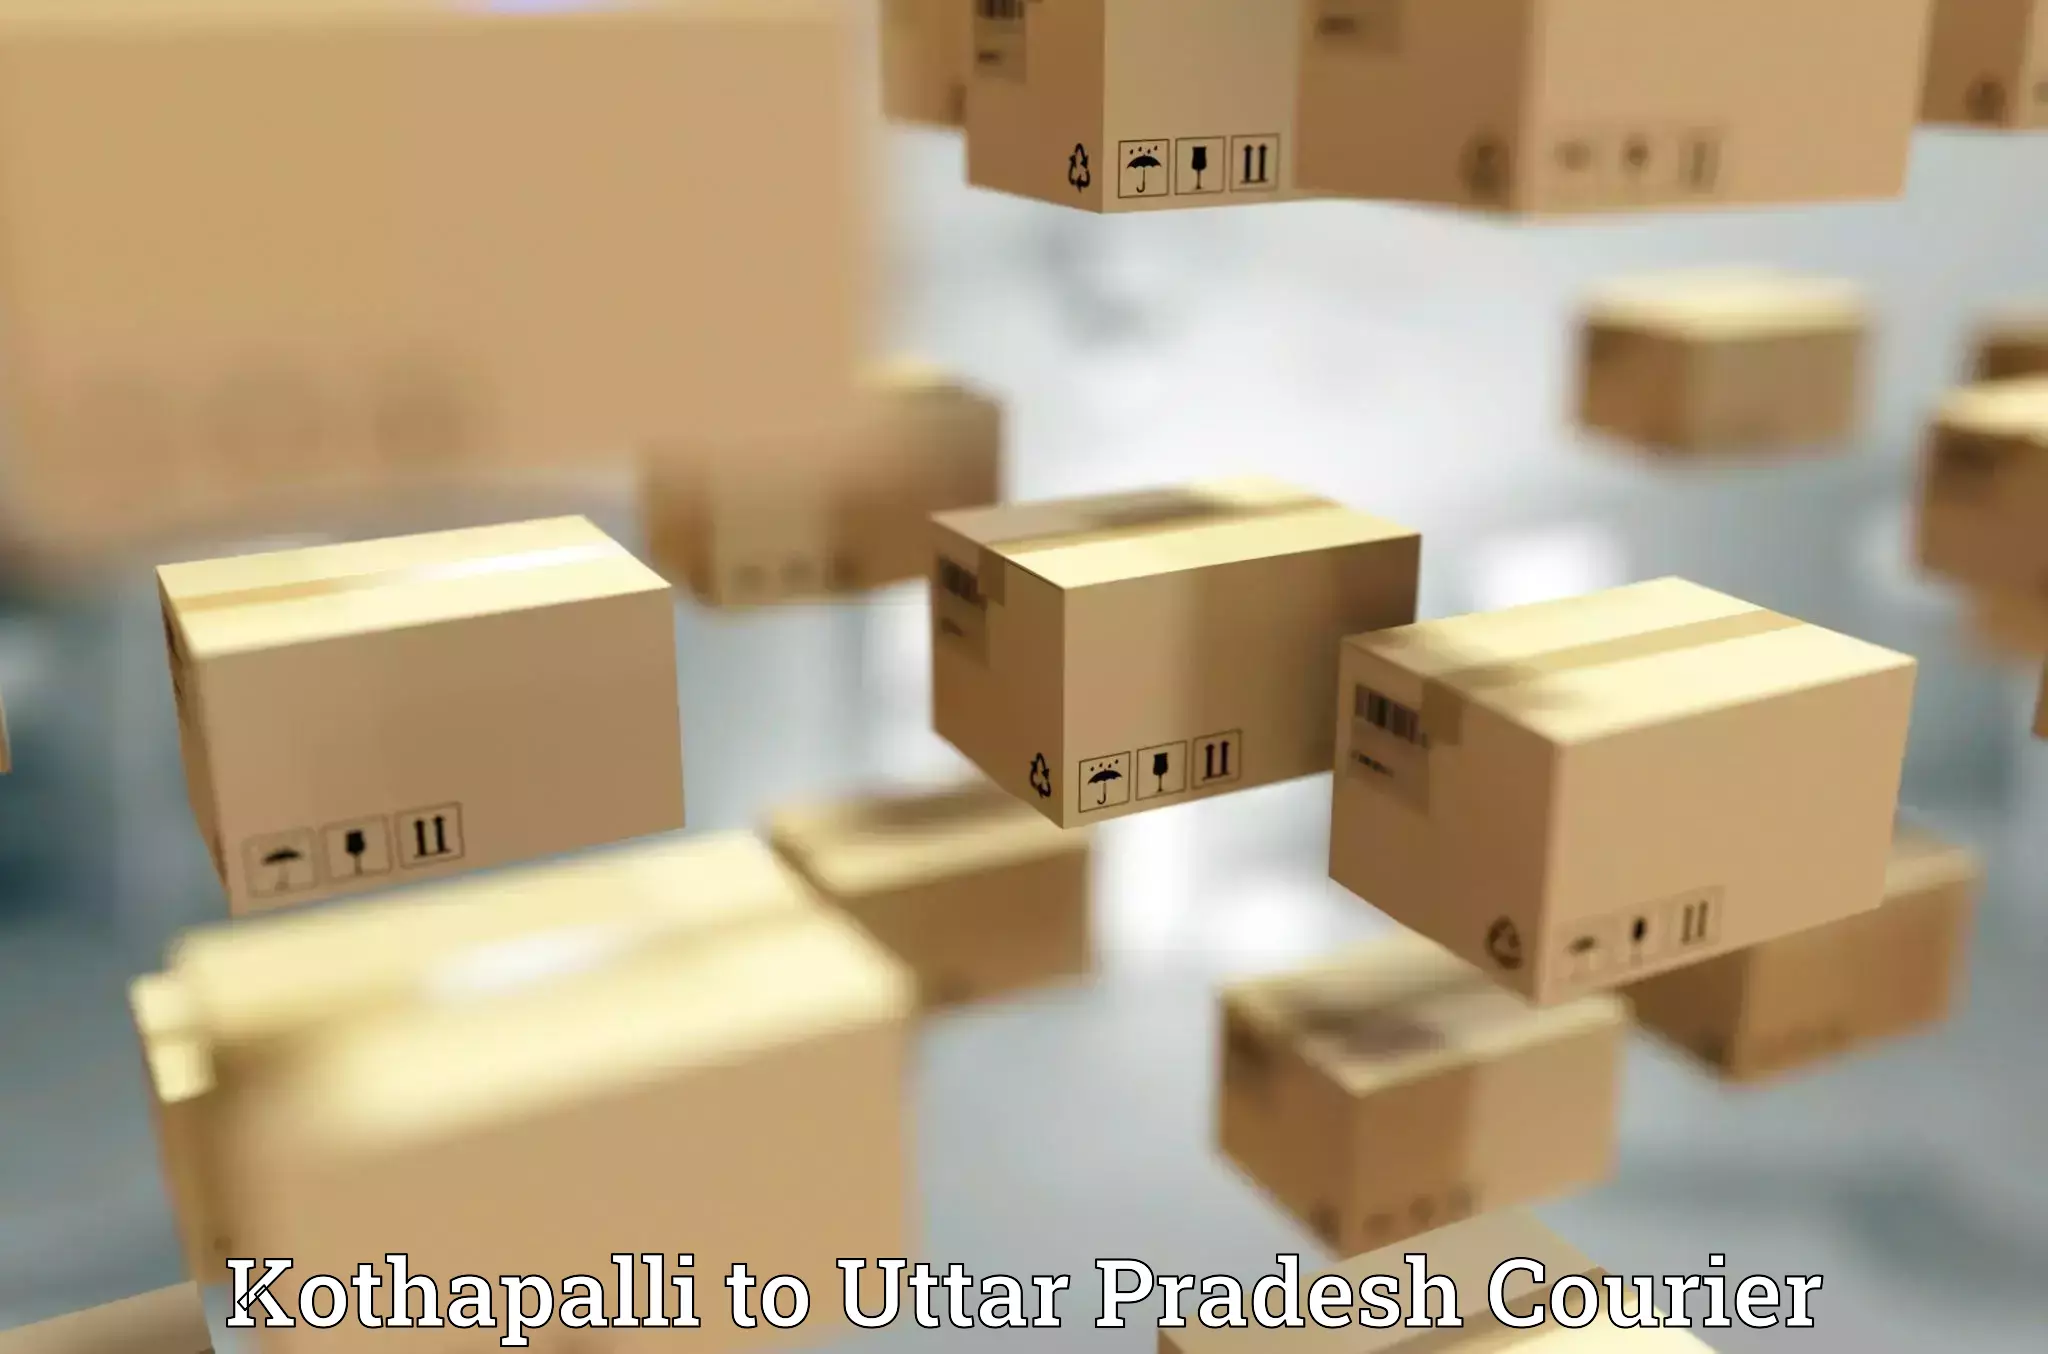 Digital courier platforms Kothapalli to Uttar Pradesh